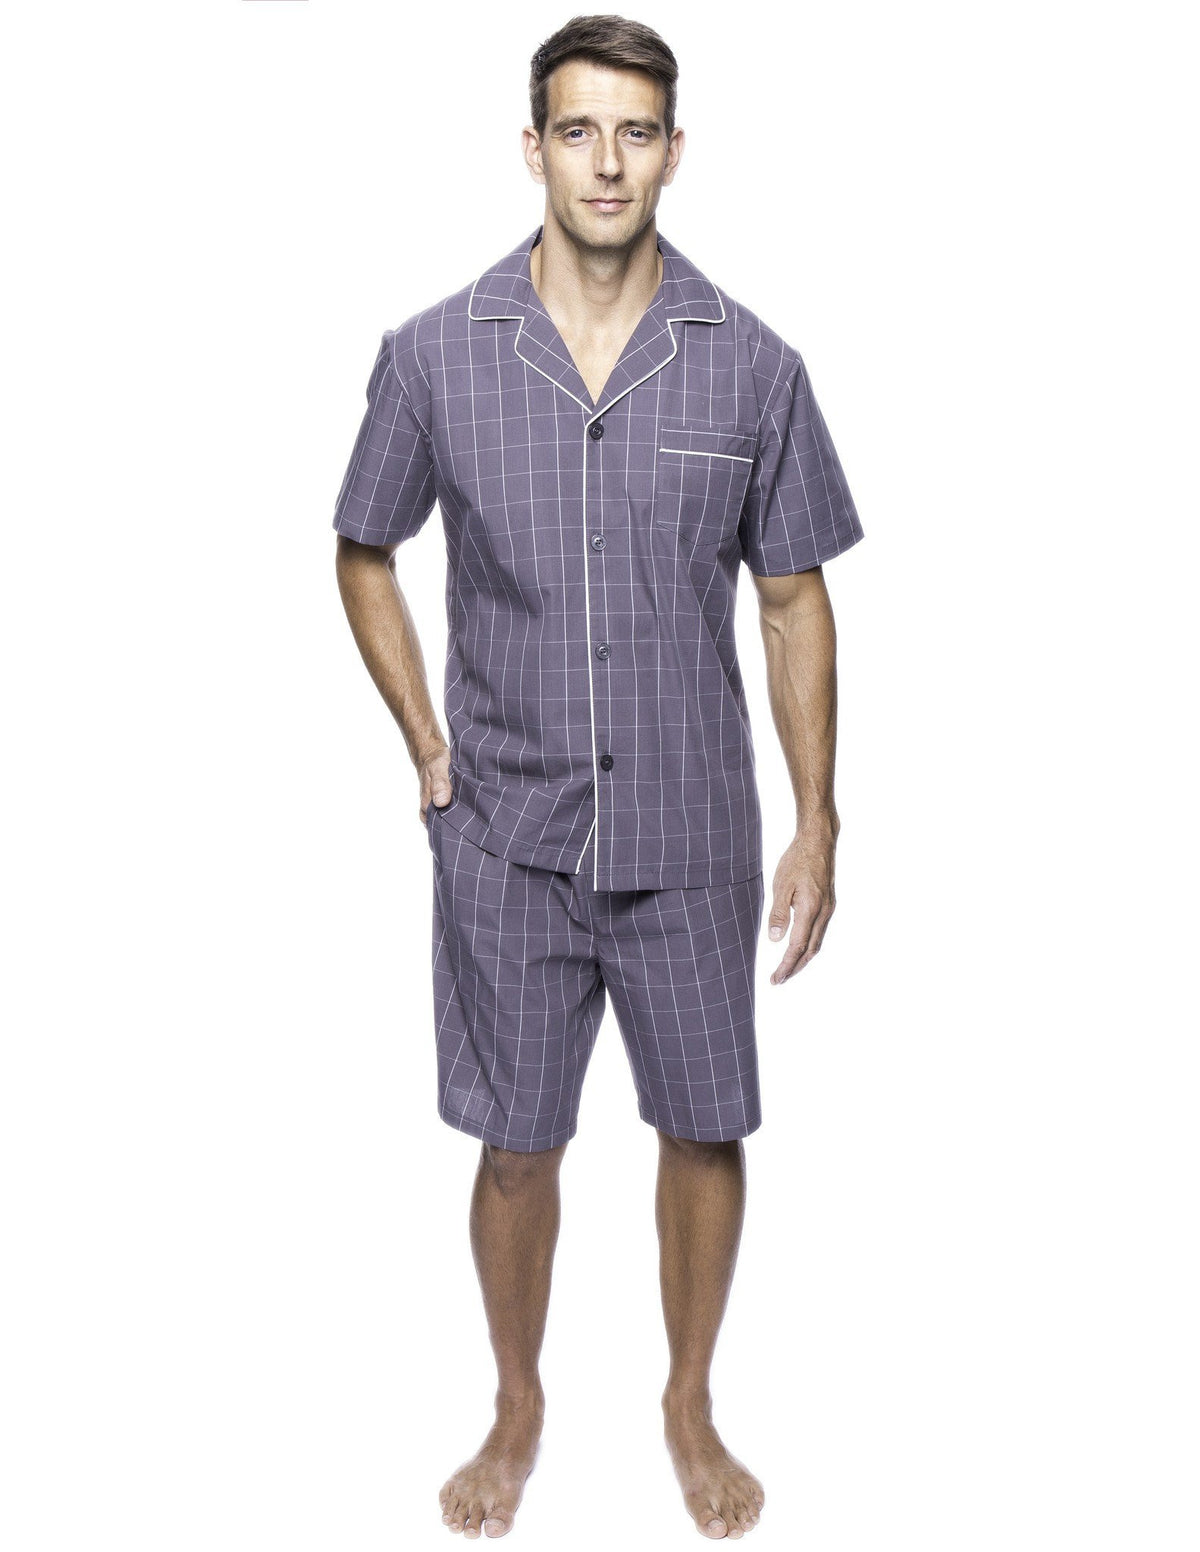 Men's 100% Woven Cotton Short Pajama Sleepwear Set - Windowpane Checks Grey